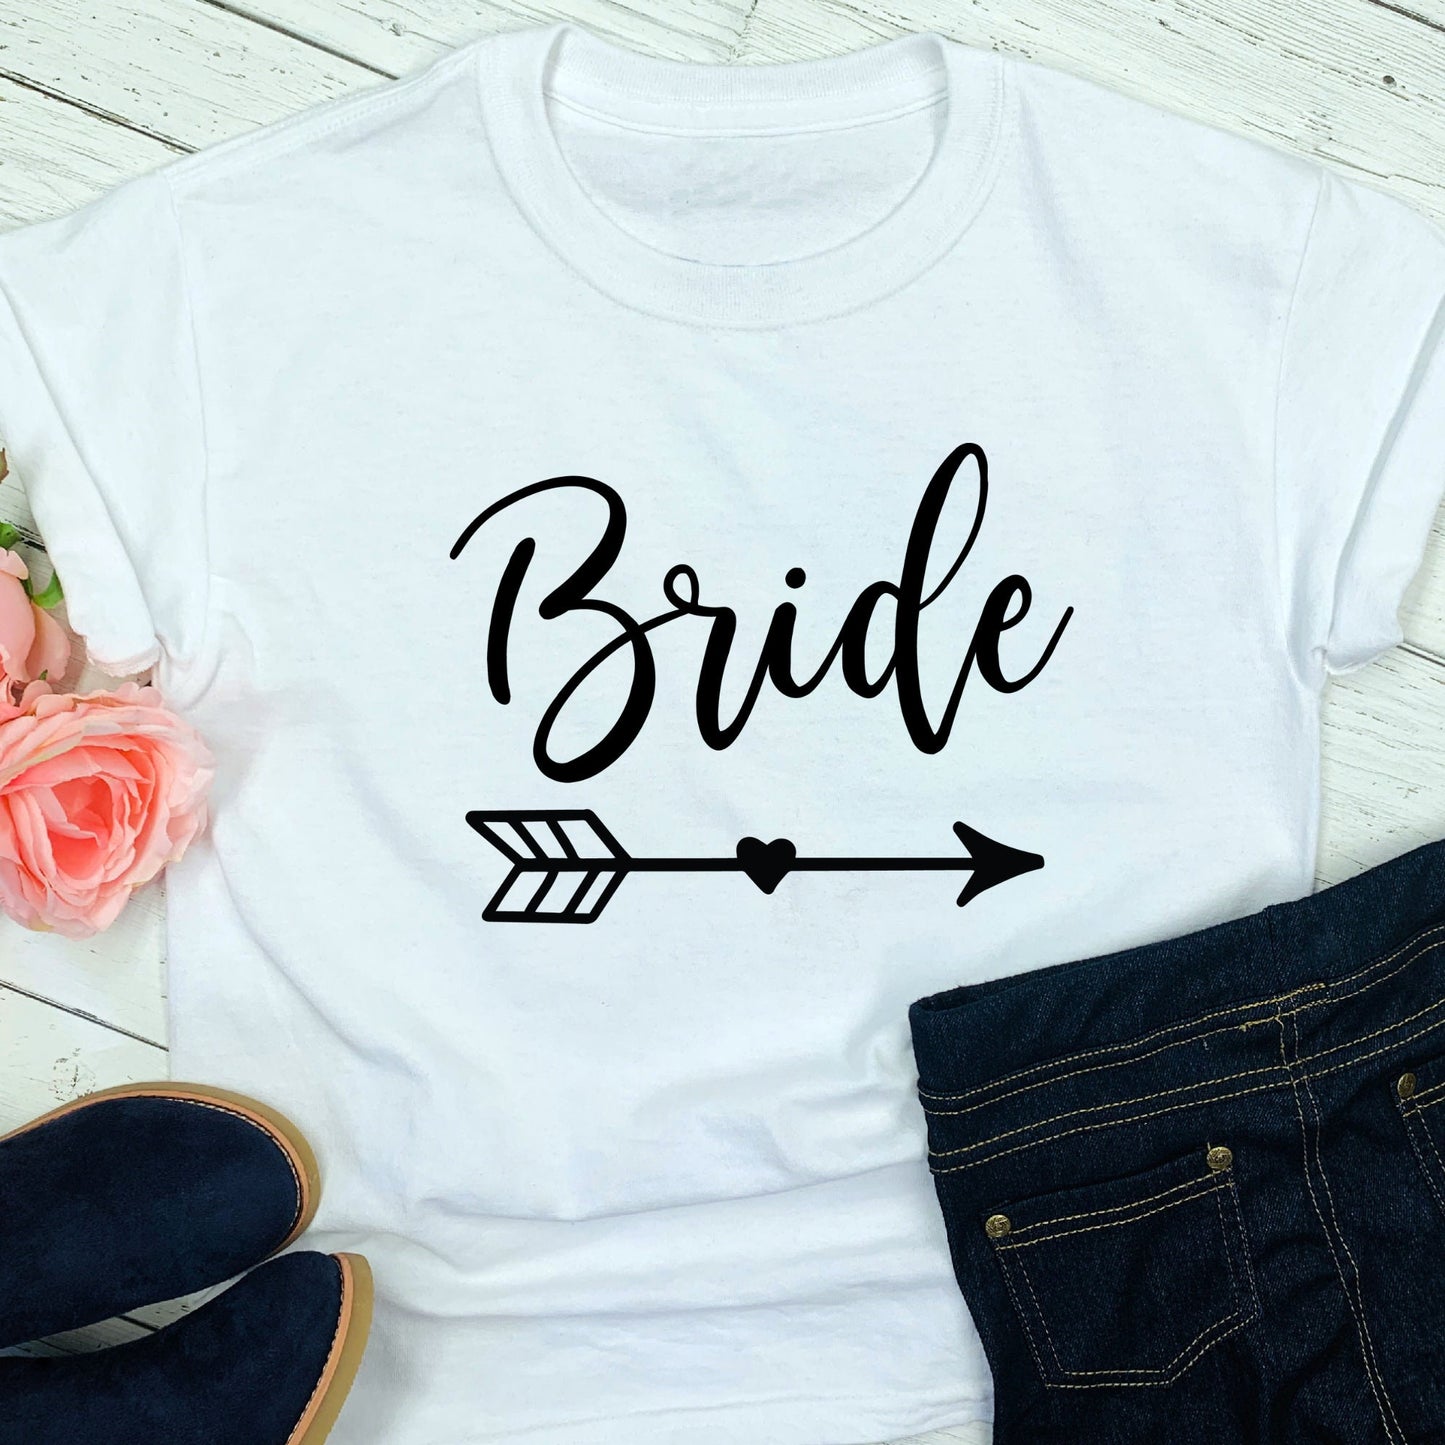 Bride SVG, Wedding SVG, Wedding Quotes, Bride Quotes SVG, Wedding svg design, Cricut, Silhouette cut file, Instant Download - SthrngurlCreations